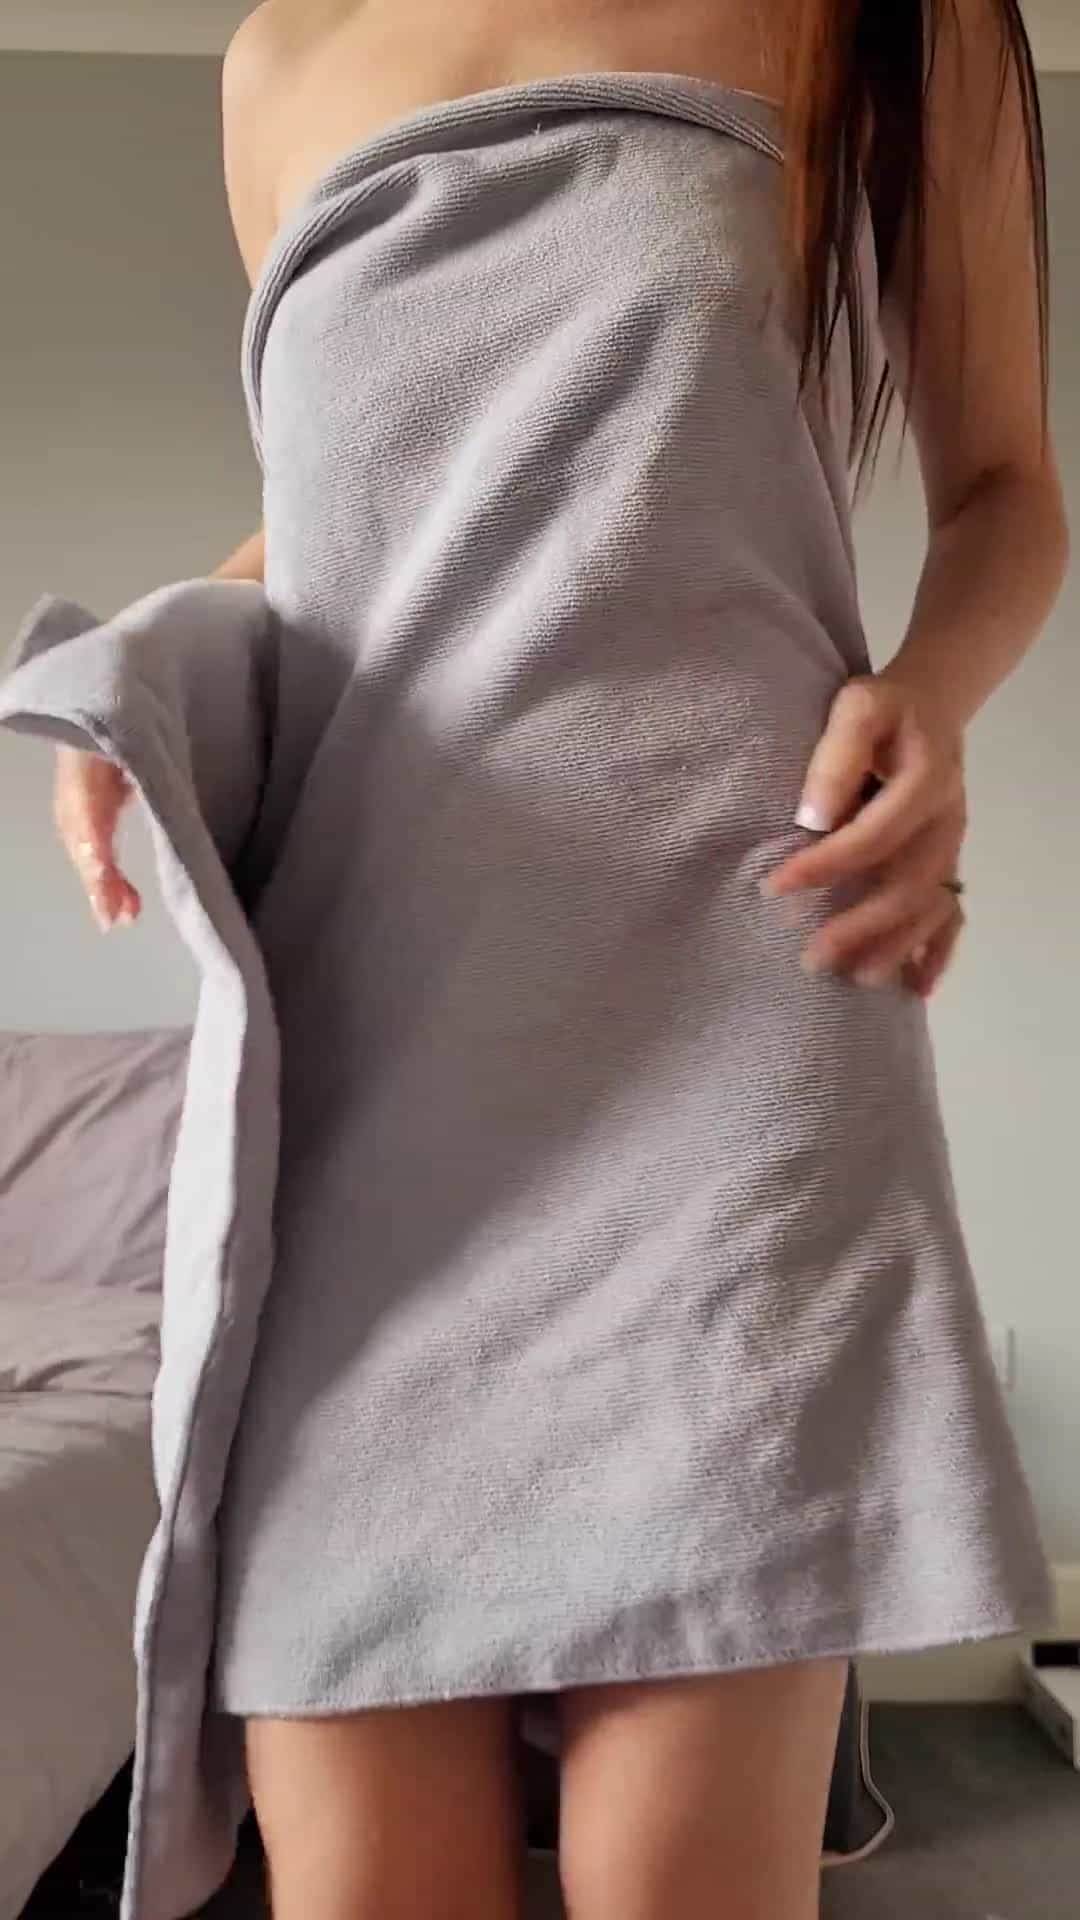 My nips tried to ruin my towel drop 😅 (38f) 